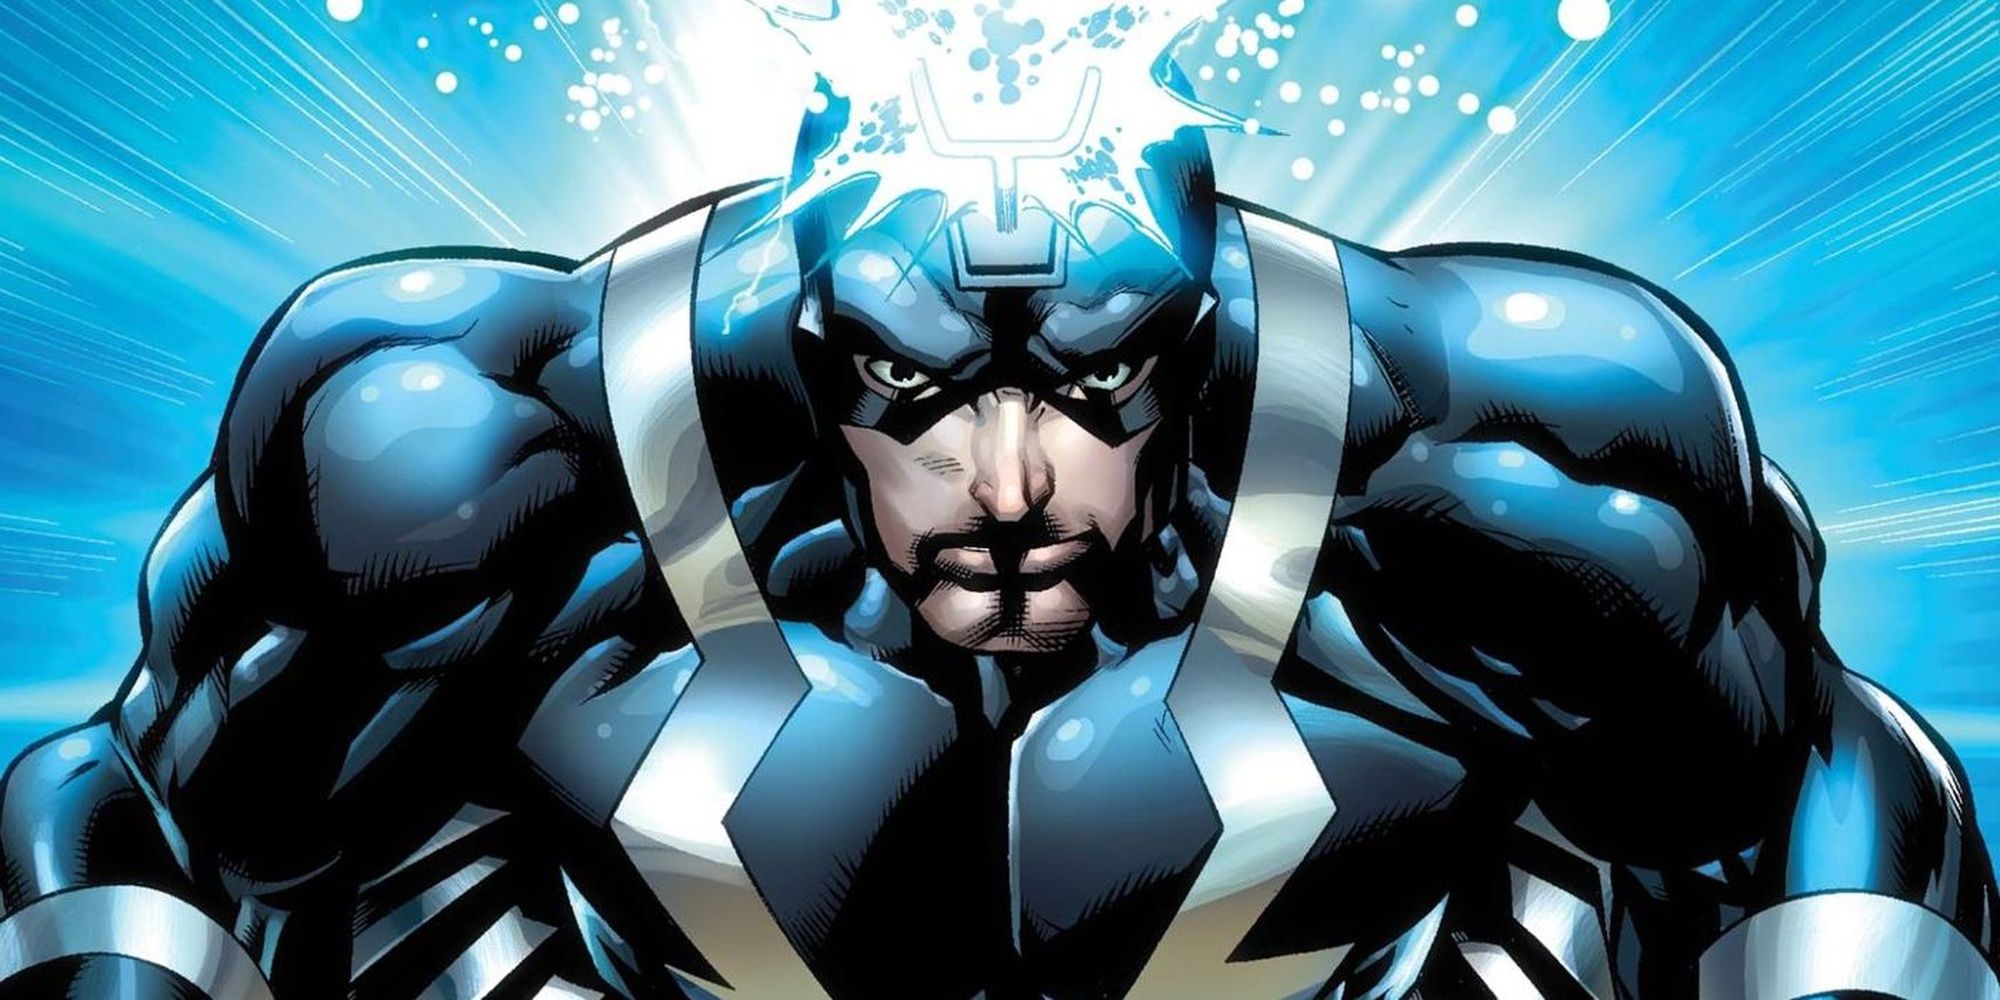 Marvel Comics' Black Bolt using his powers